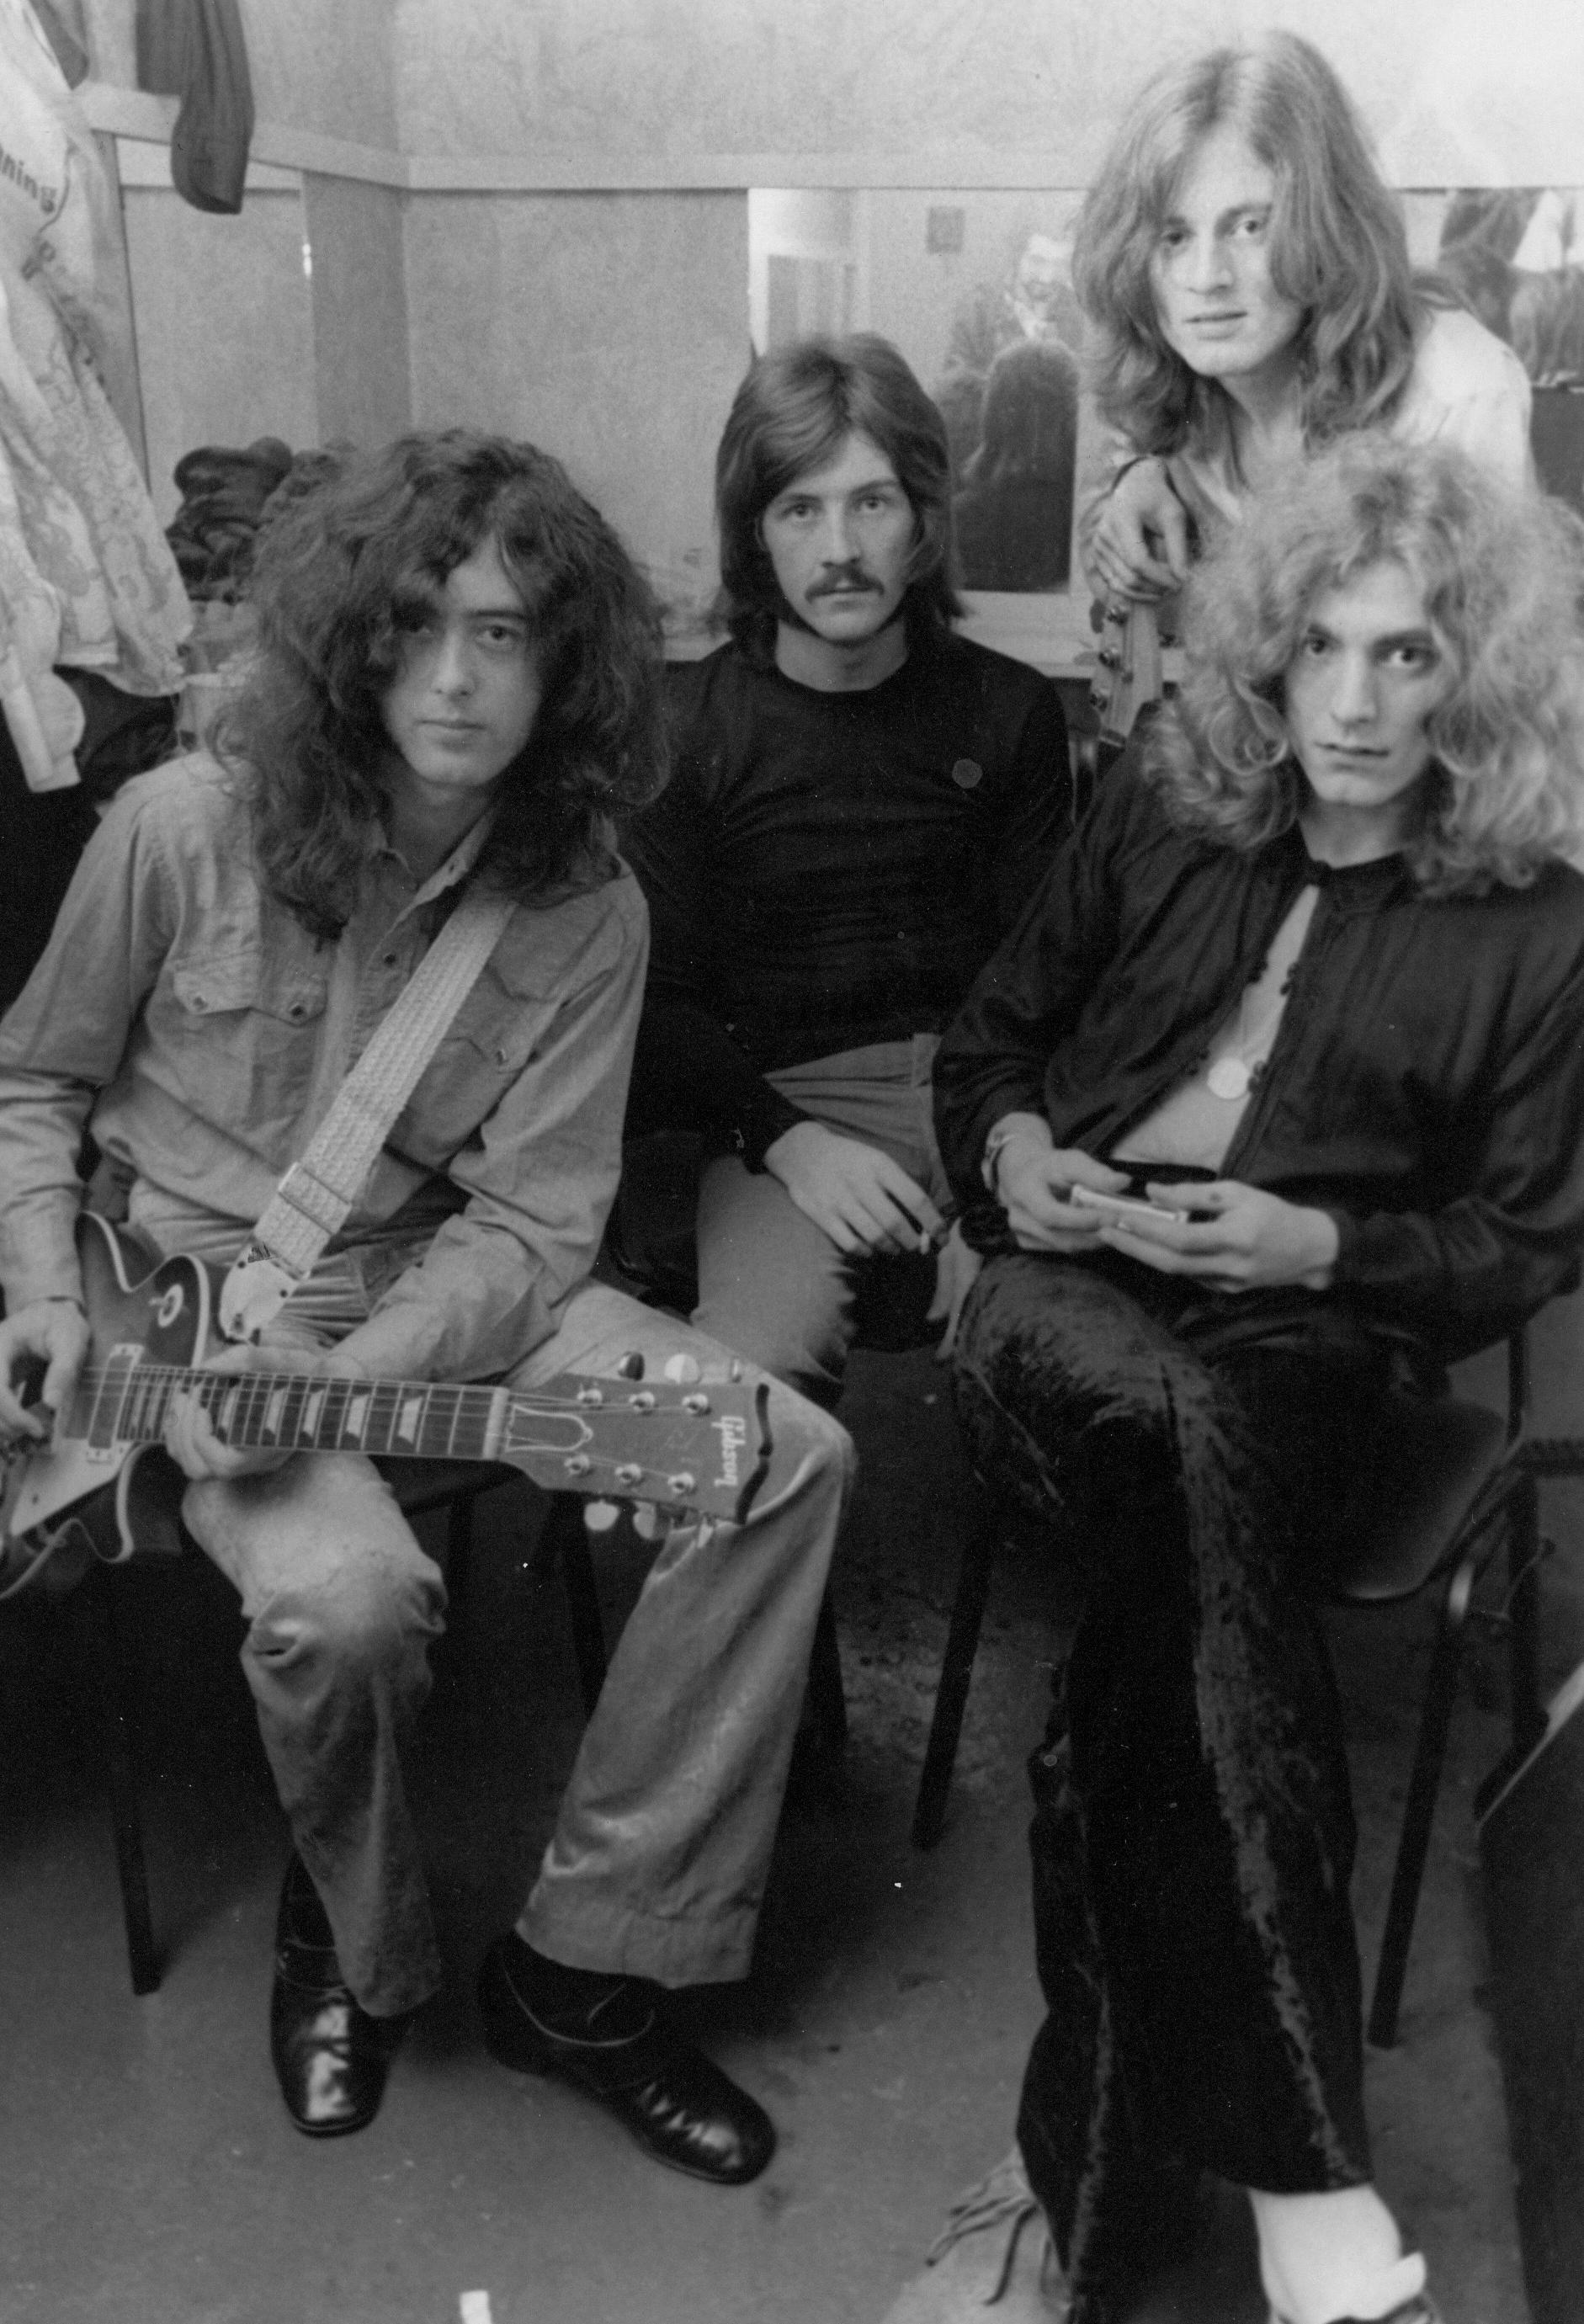 Chris Walter Portrait Photograph - Led Zeppelin Candid Group Portrait in Dressing Room Vintage Original Photograph